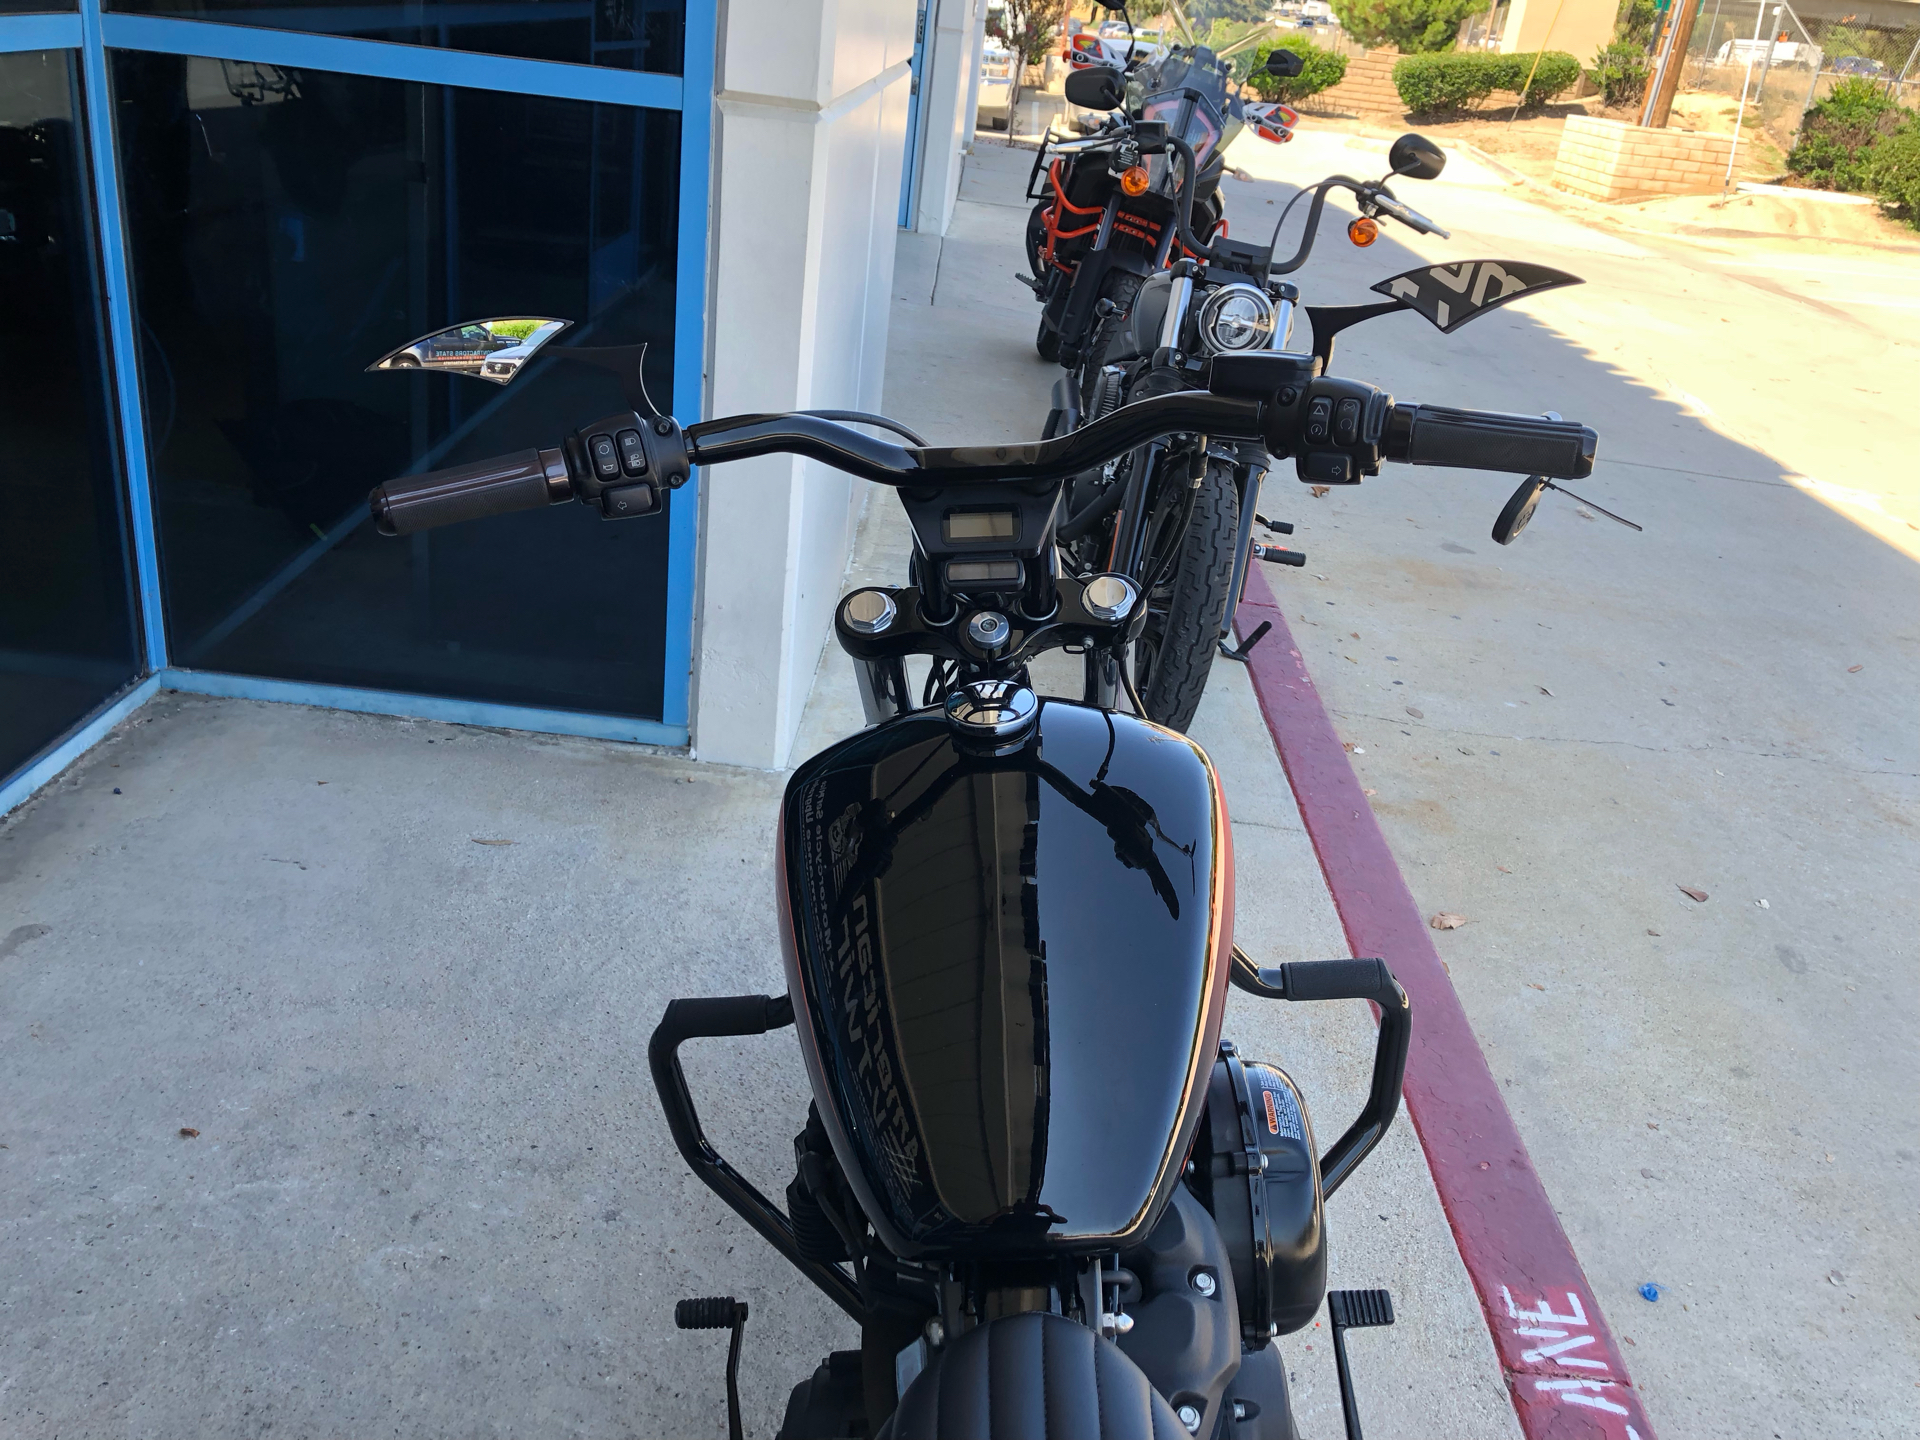 2020 Harley-Davidson Street Bob® in Temecula, California - Photo 8